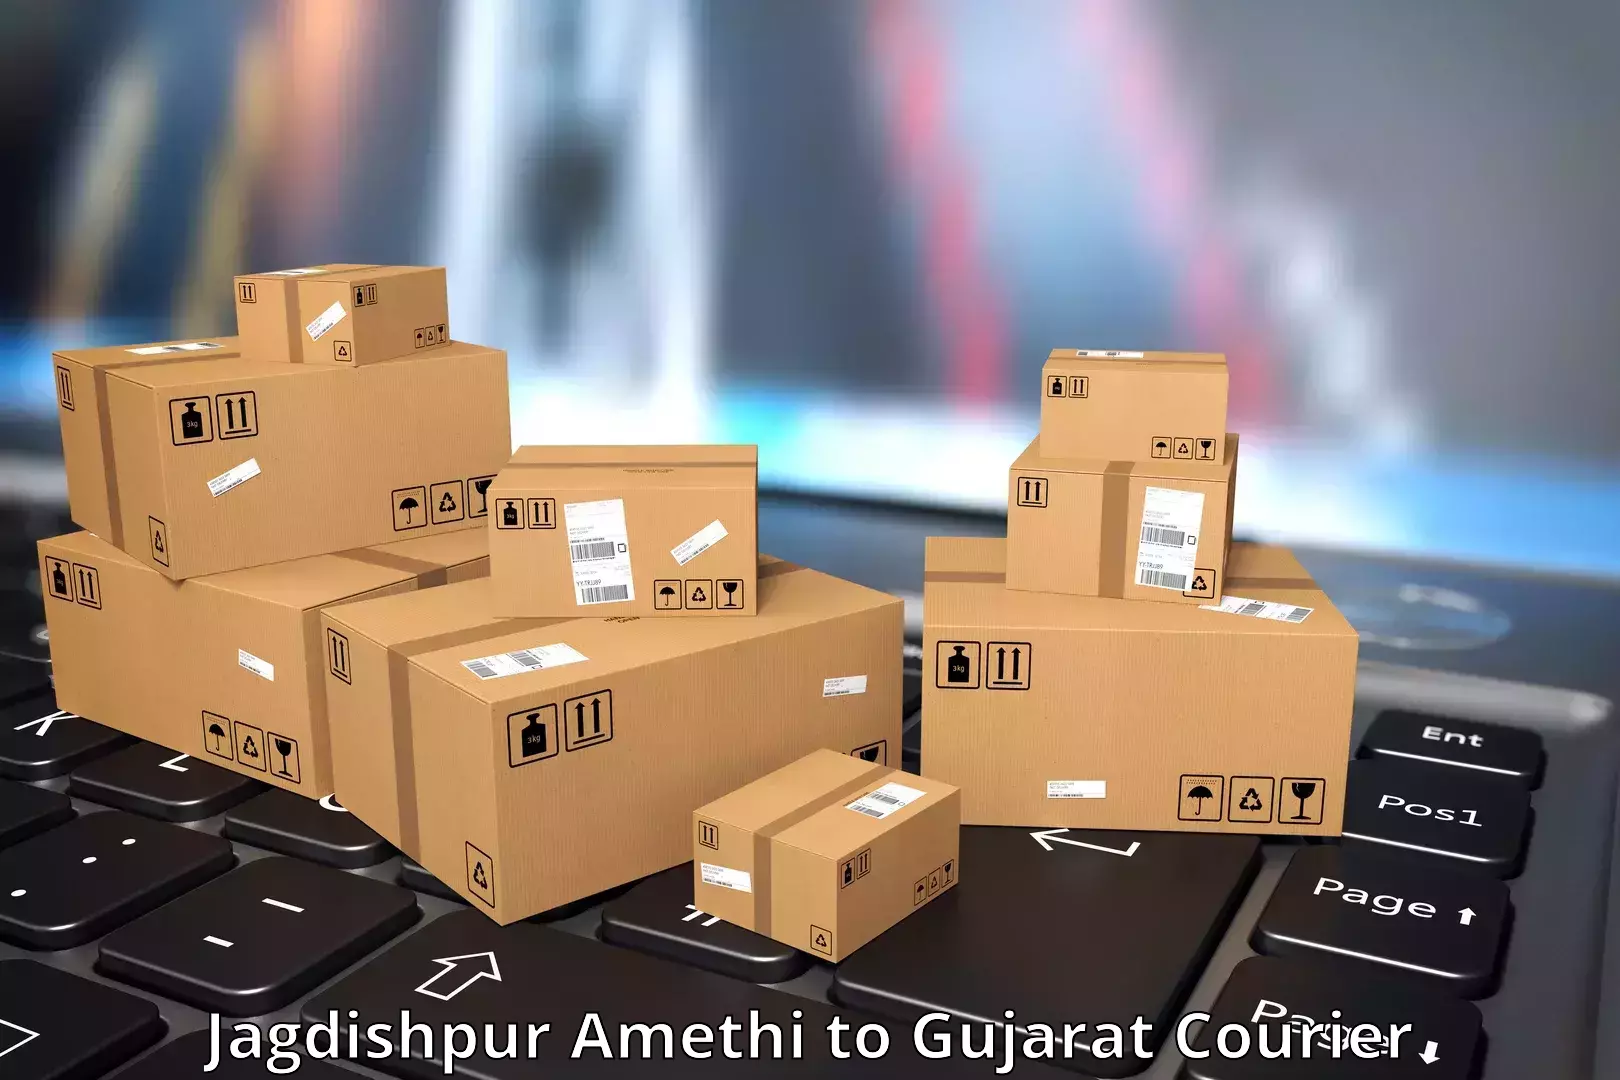 Courier service partnerships Jagdishpur Amethi to Khedbrahma